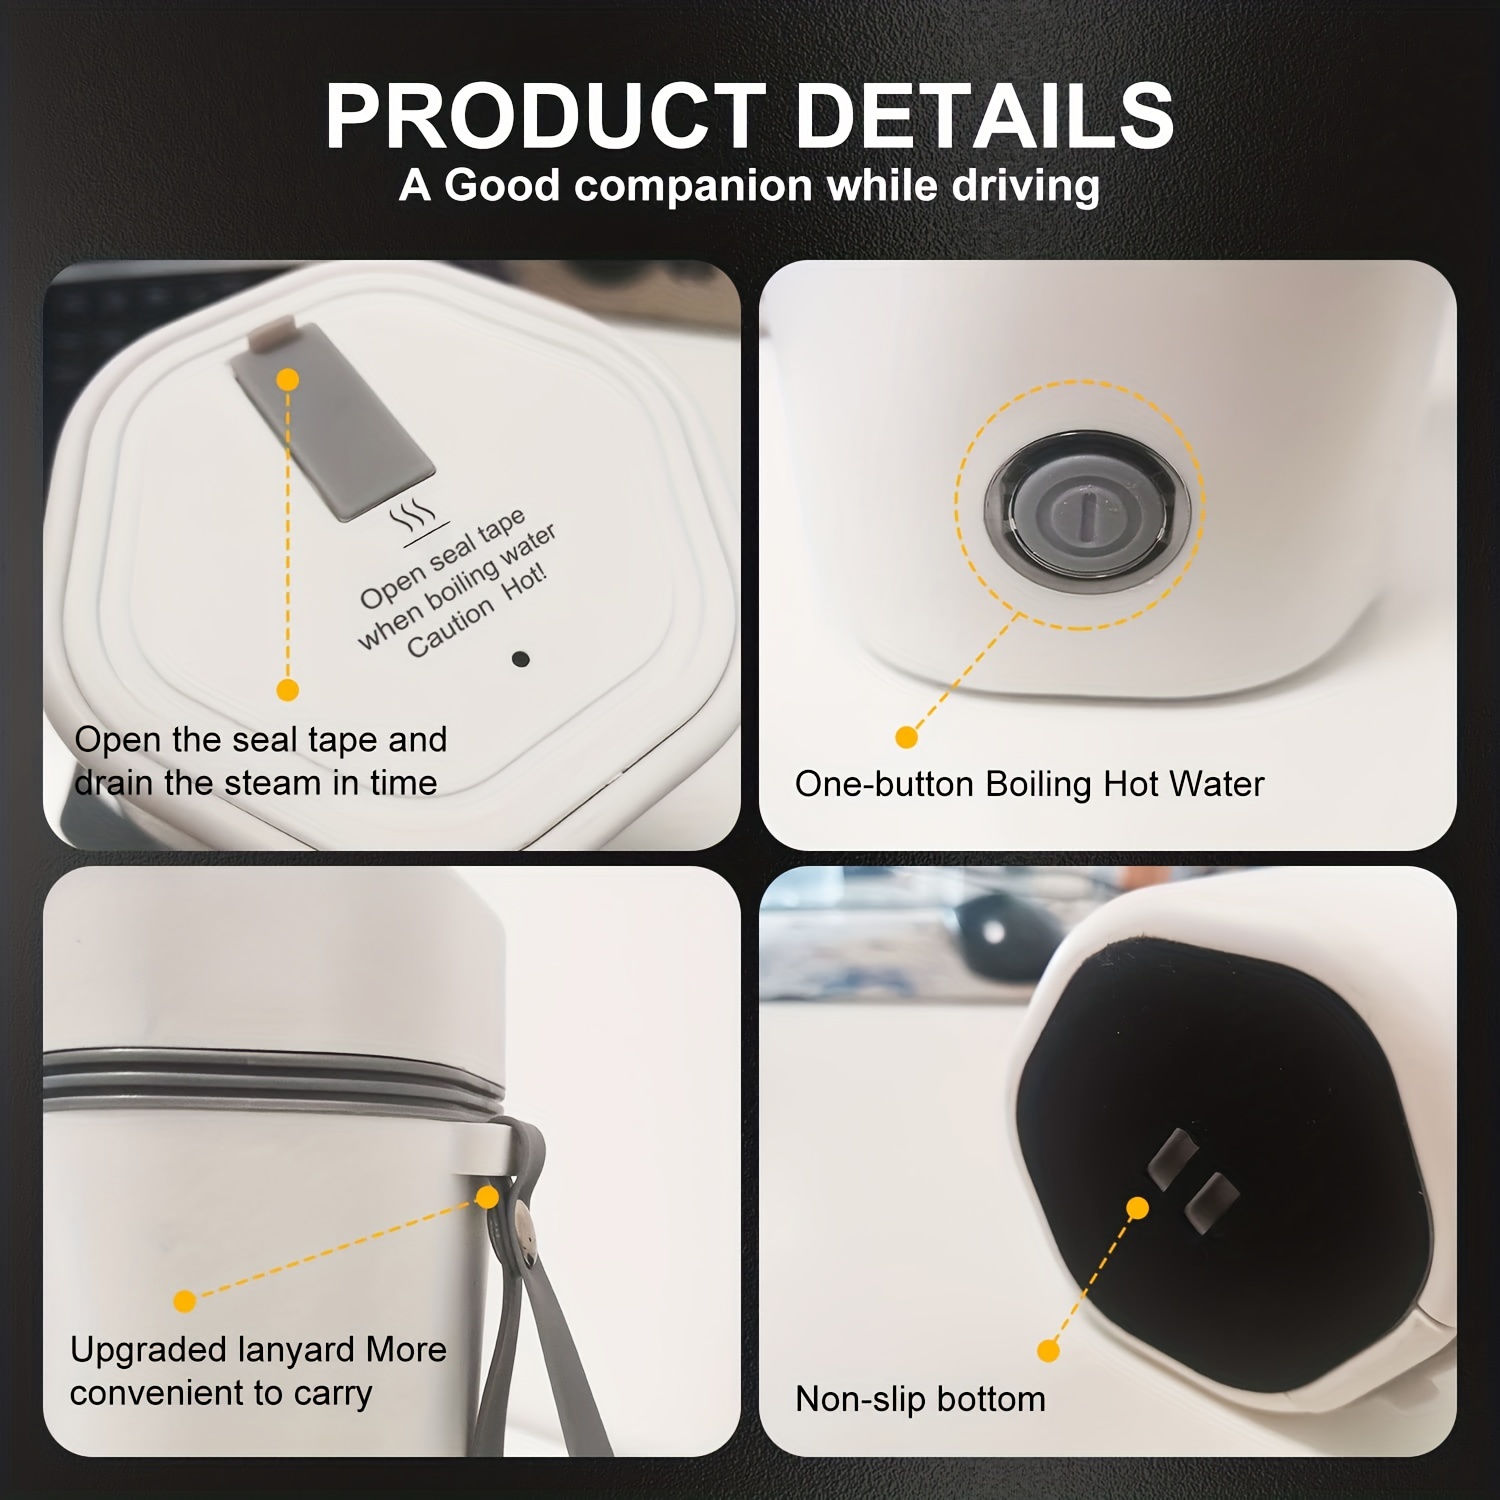 Car Kettle Water Boiler 12v – Portable Electric Kettle - Temu